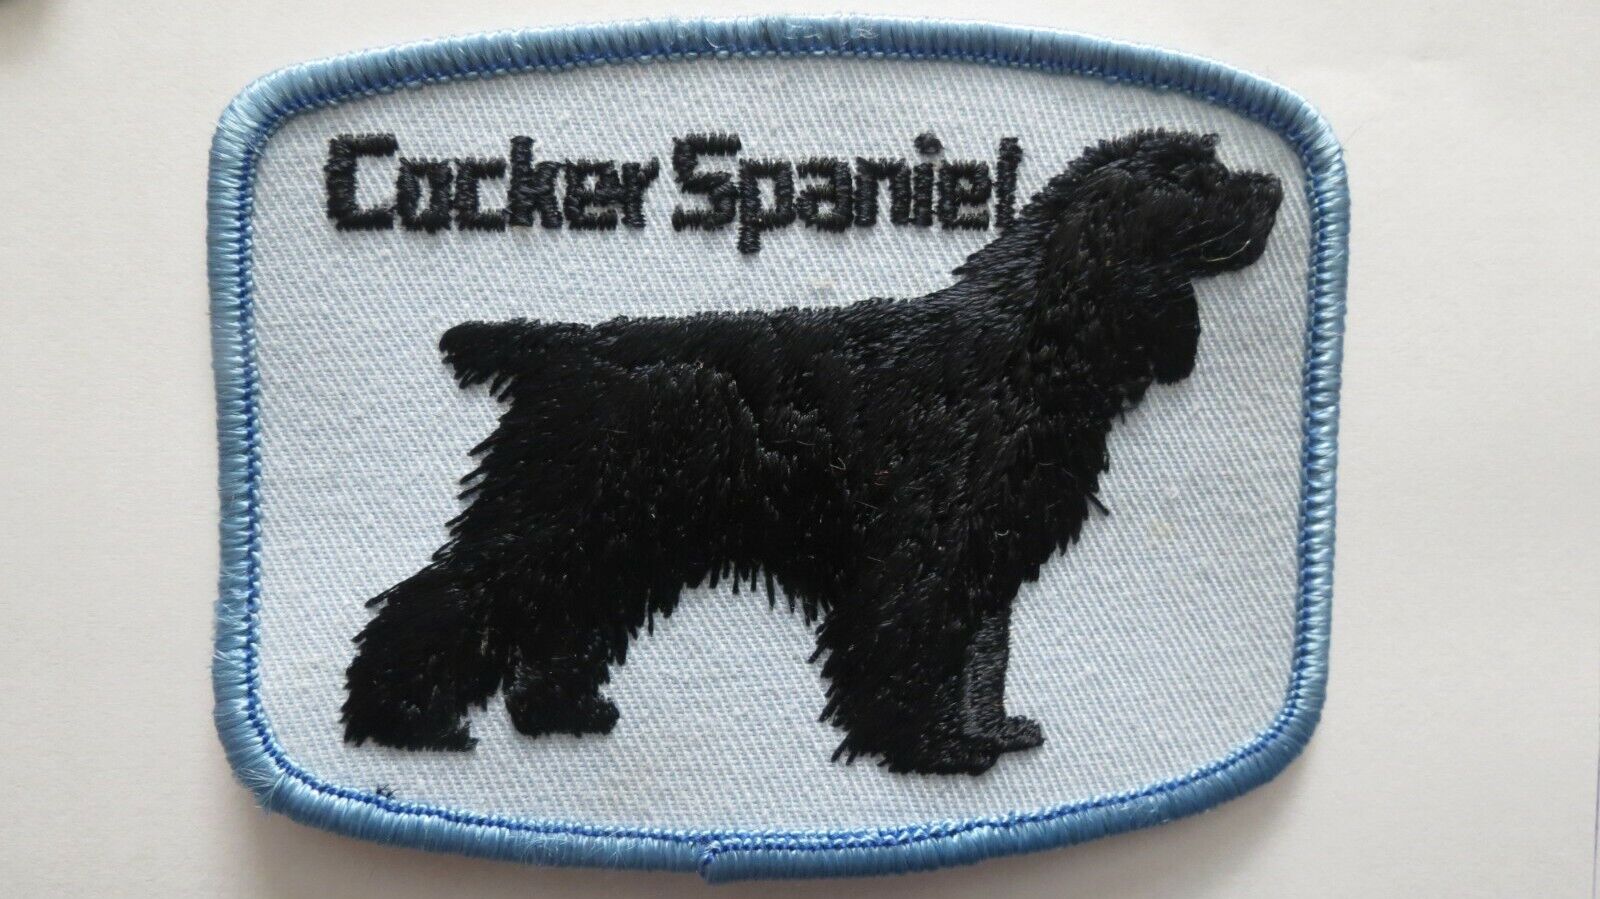 Vintage Cocker Spaniel Dog Patch, Black Cocker Spaniel